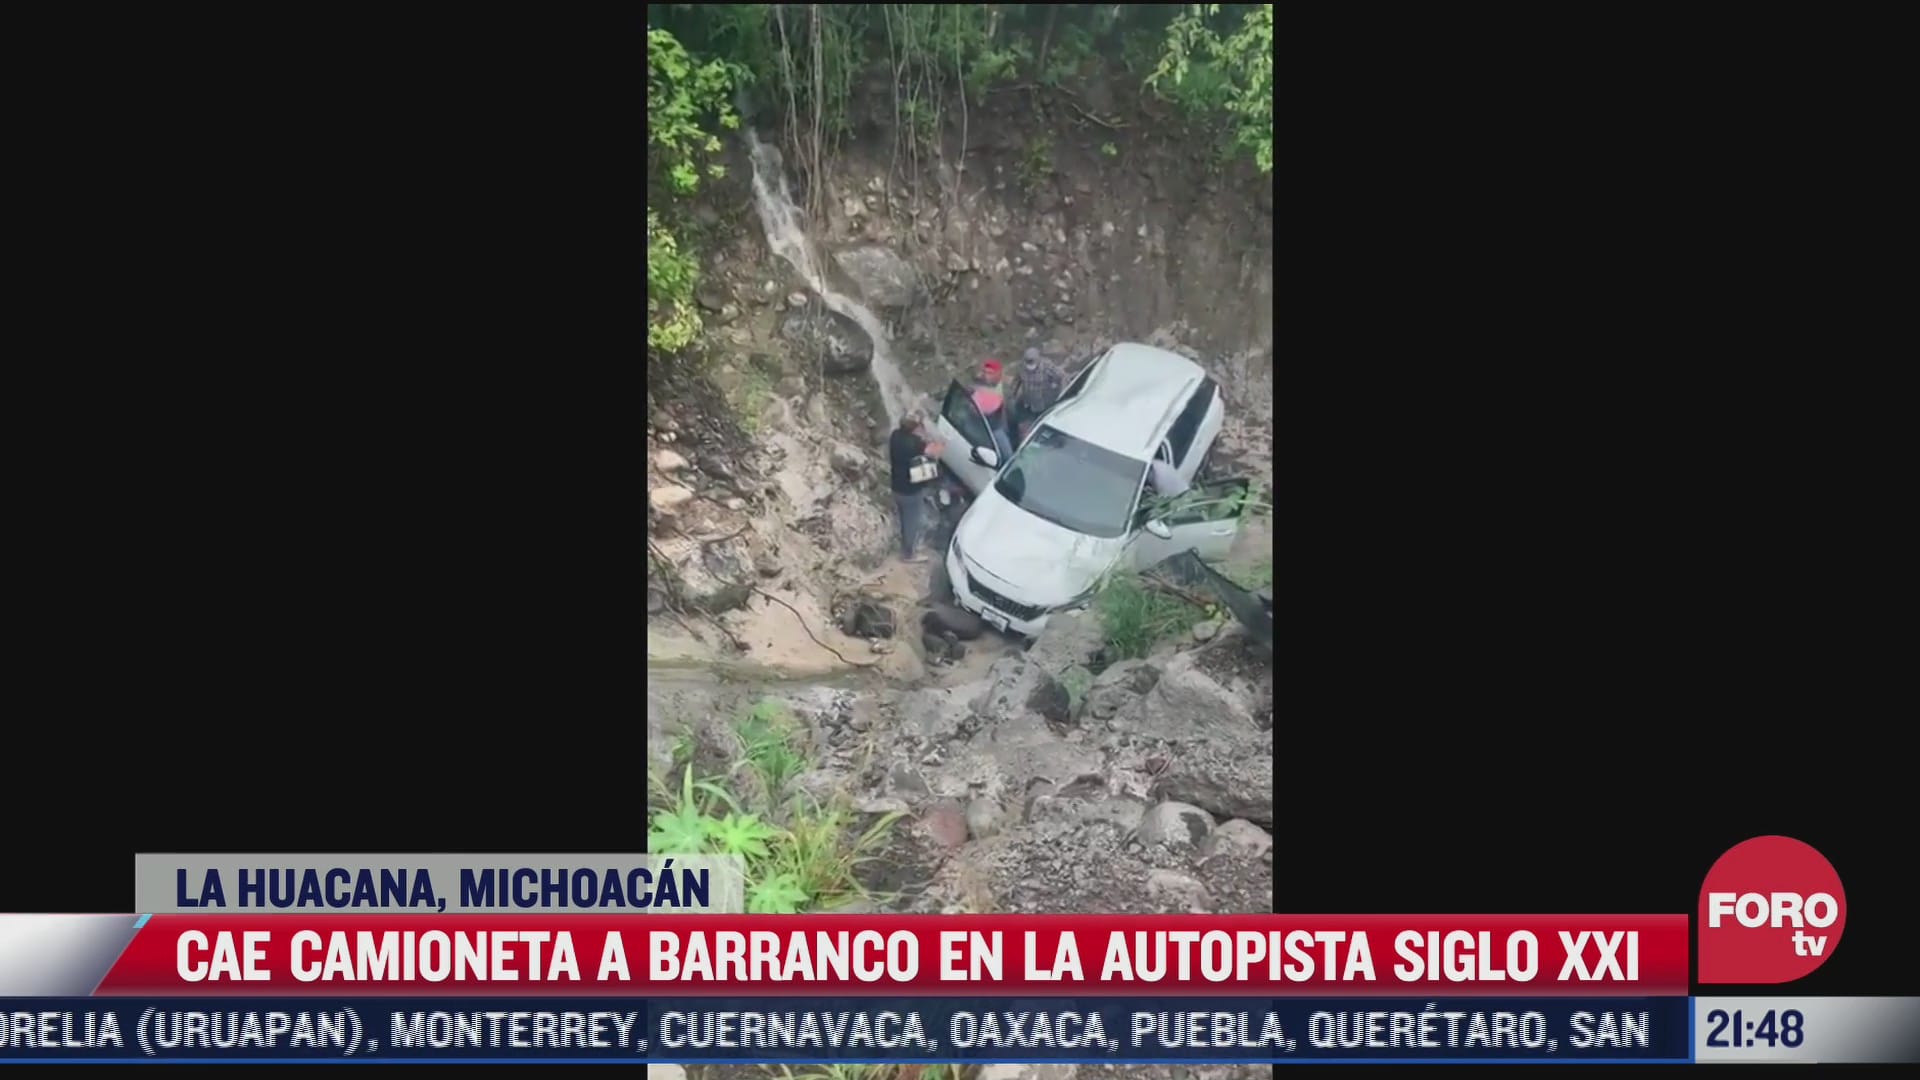 camioneta cae a barranco en la autopista siglo xxi en michoacan